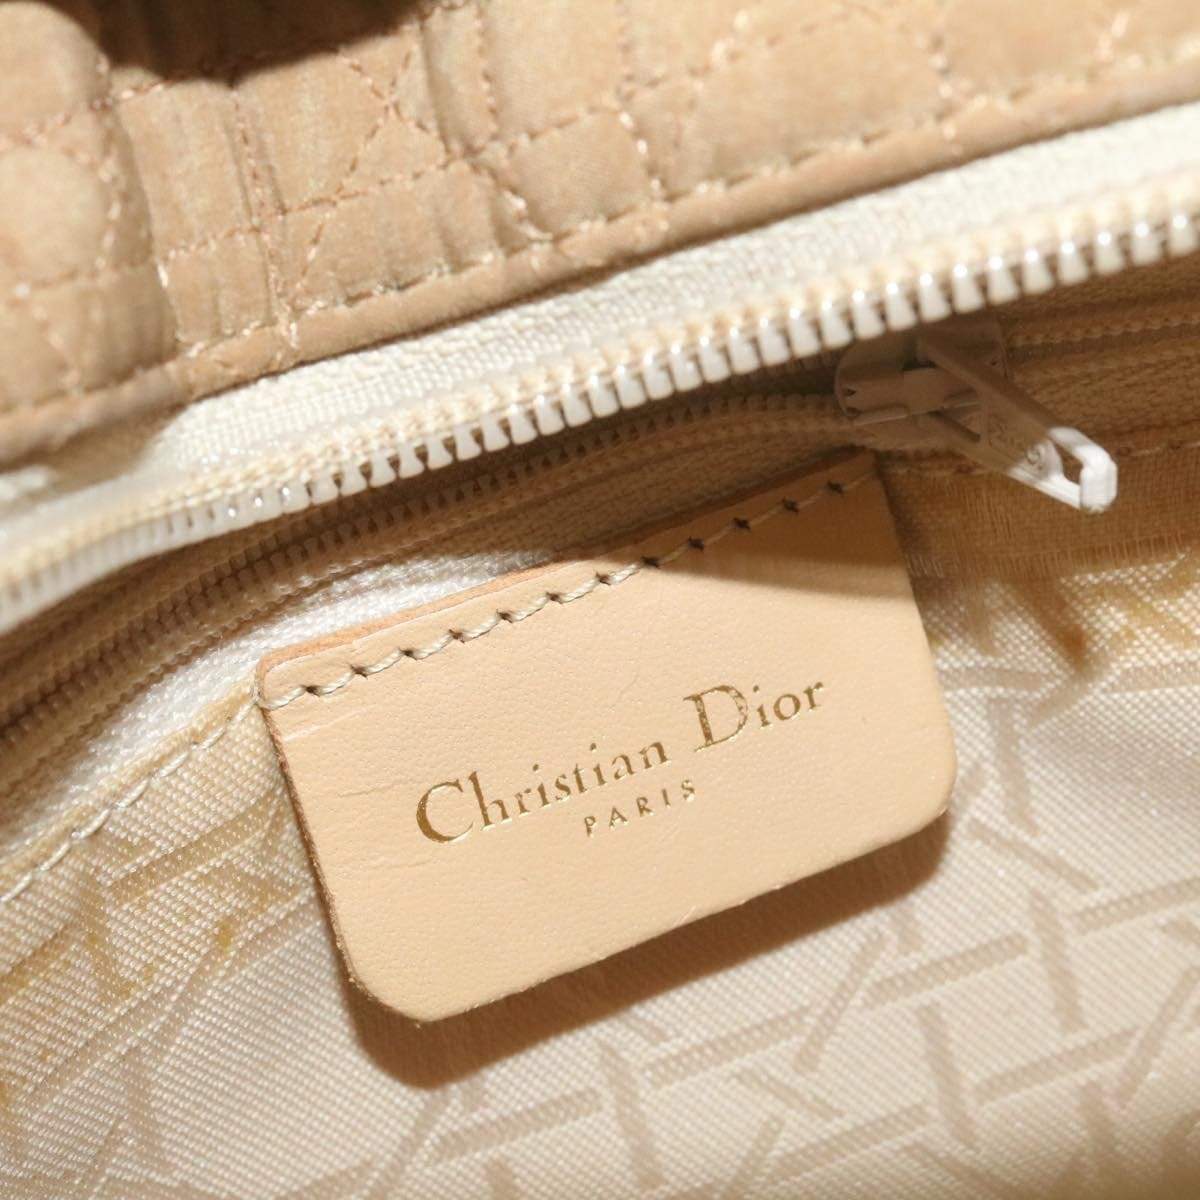 Christian Dior CHRISTIAN DIOR Lady Dior Canage Hand Bag Beige Nylon Auth 21829 - AWL1091